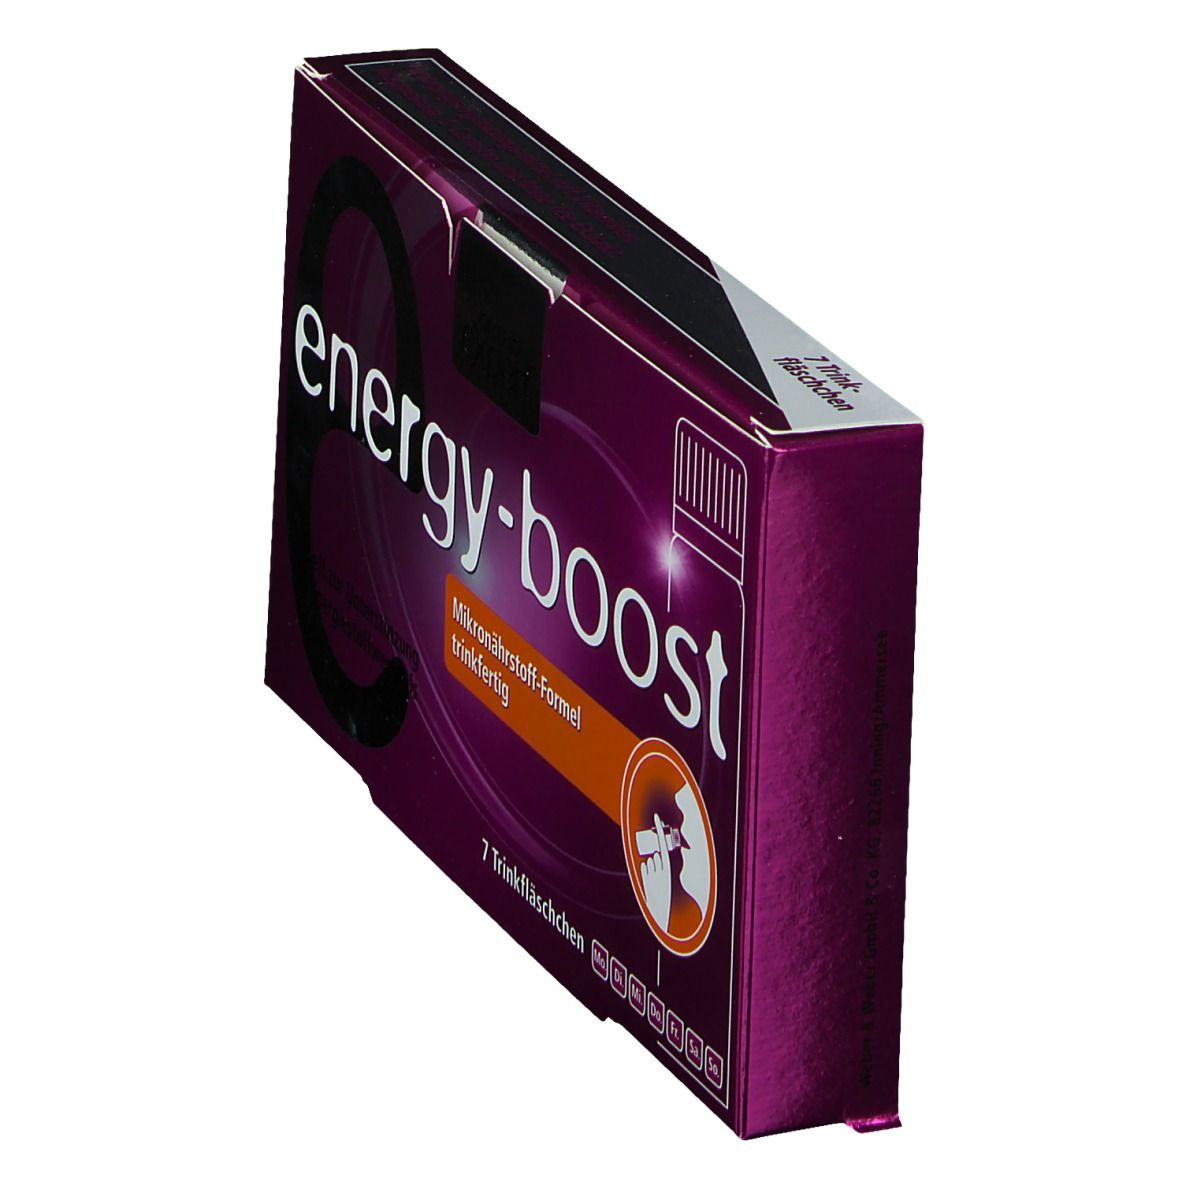 energy-boost Orthoexpert®